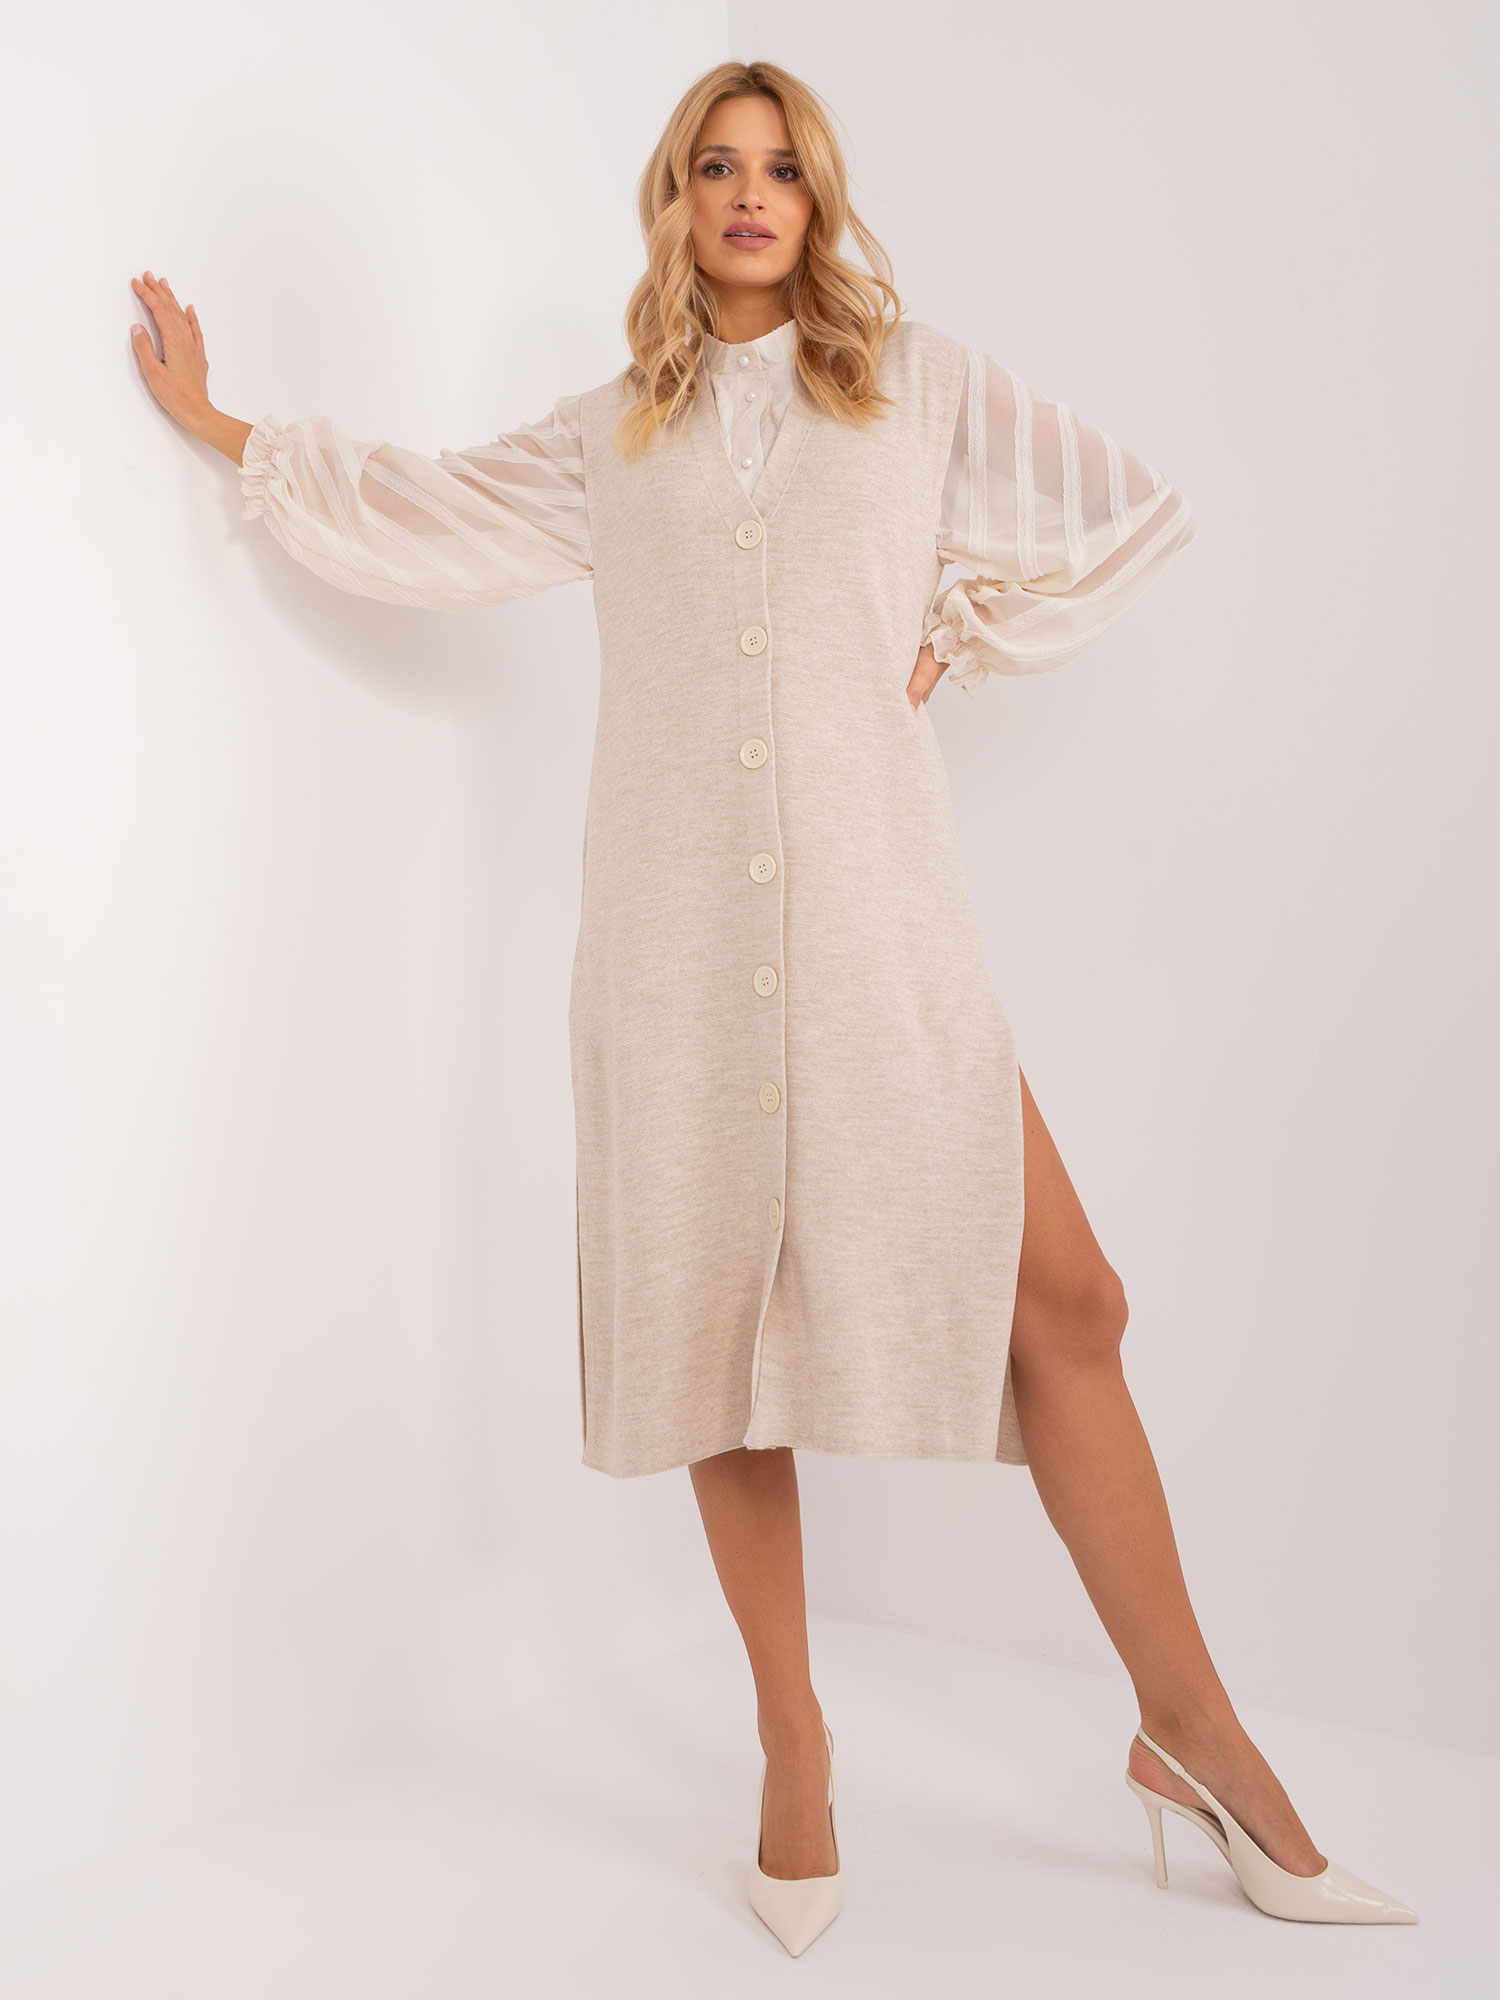 Light beige simple knitted dress